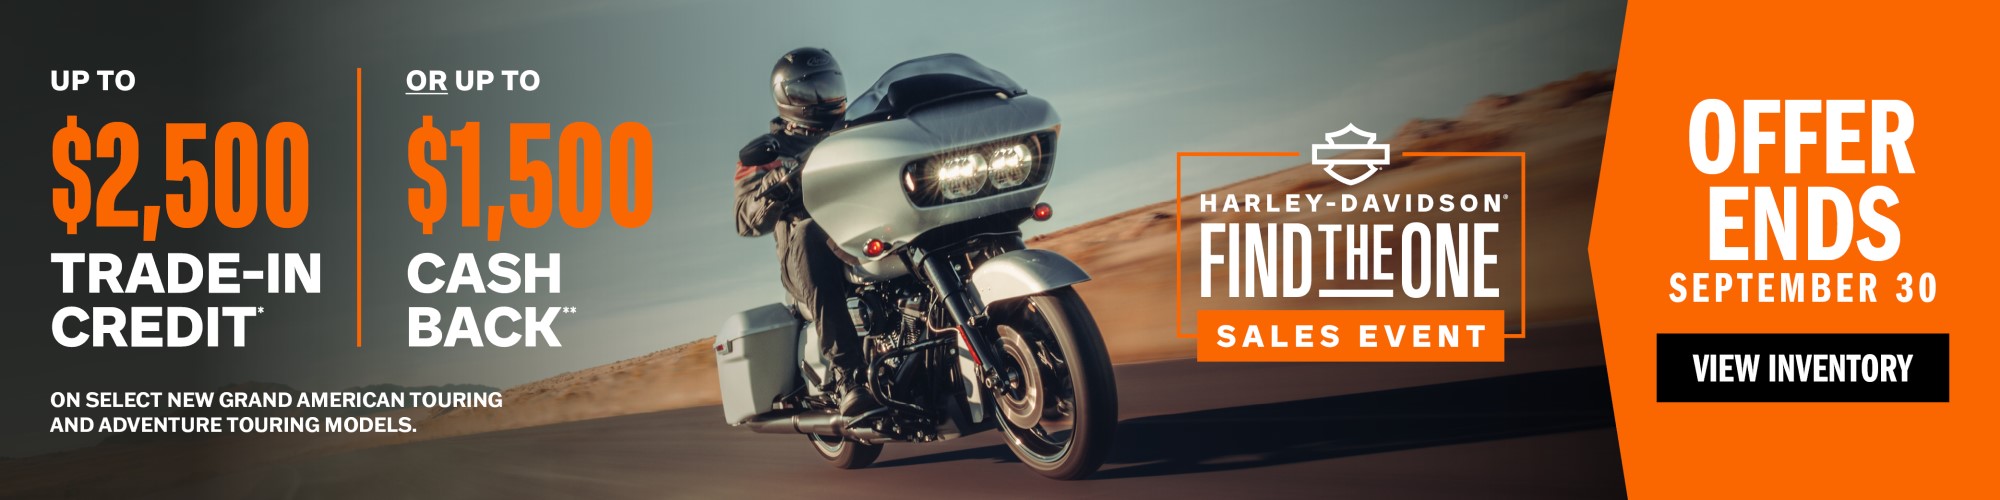 Find the One - 202319 at Quaid Harley-Davidson, Loma Linda, CA 92354